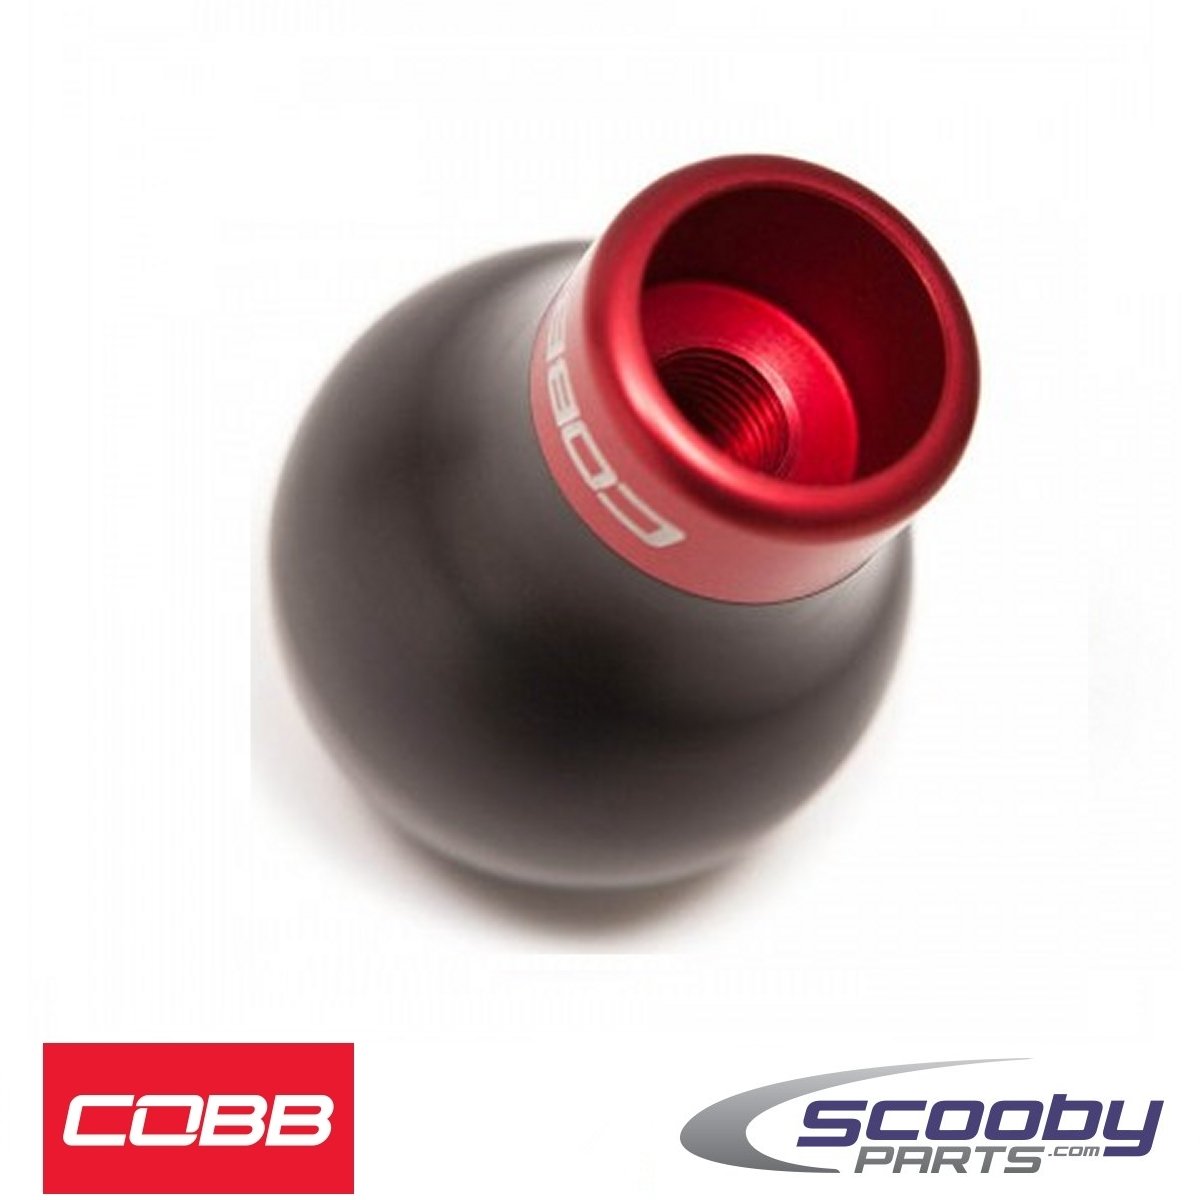 COBB Subaru 6-speed Impreza STI COBB Gearknob - Race Red_2